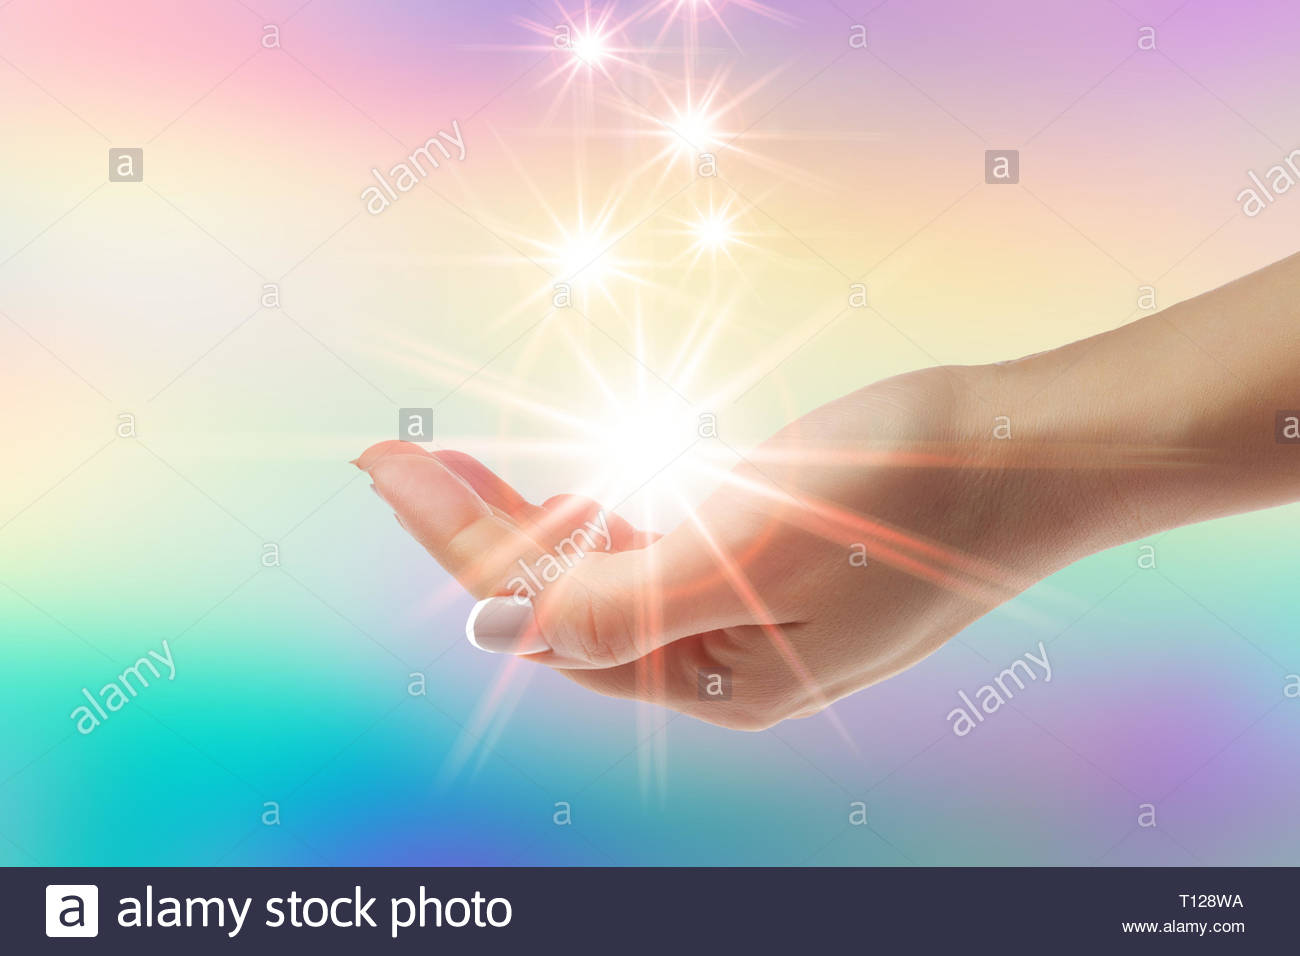 Healing Hands With Bright Sunburst On Rainbow Background Stock